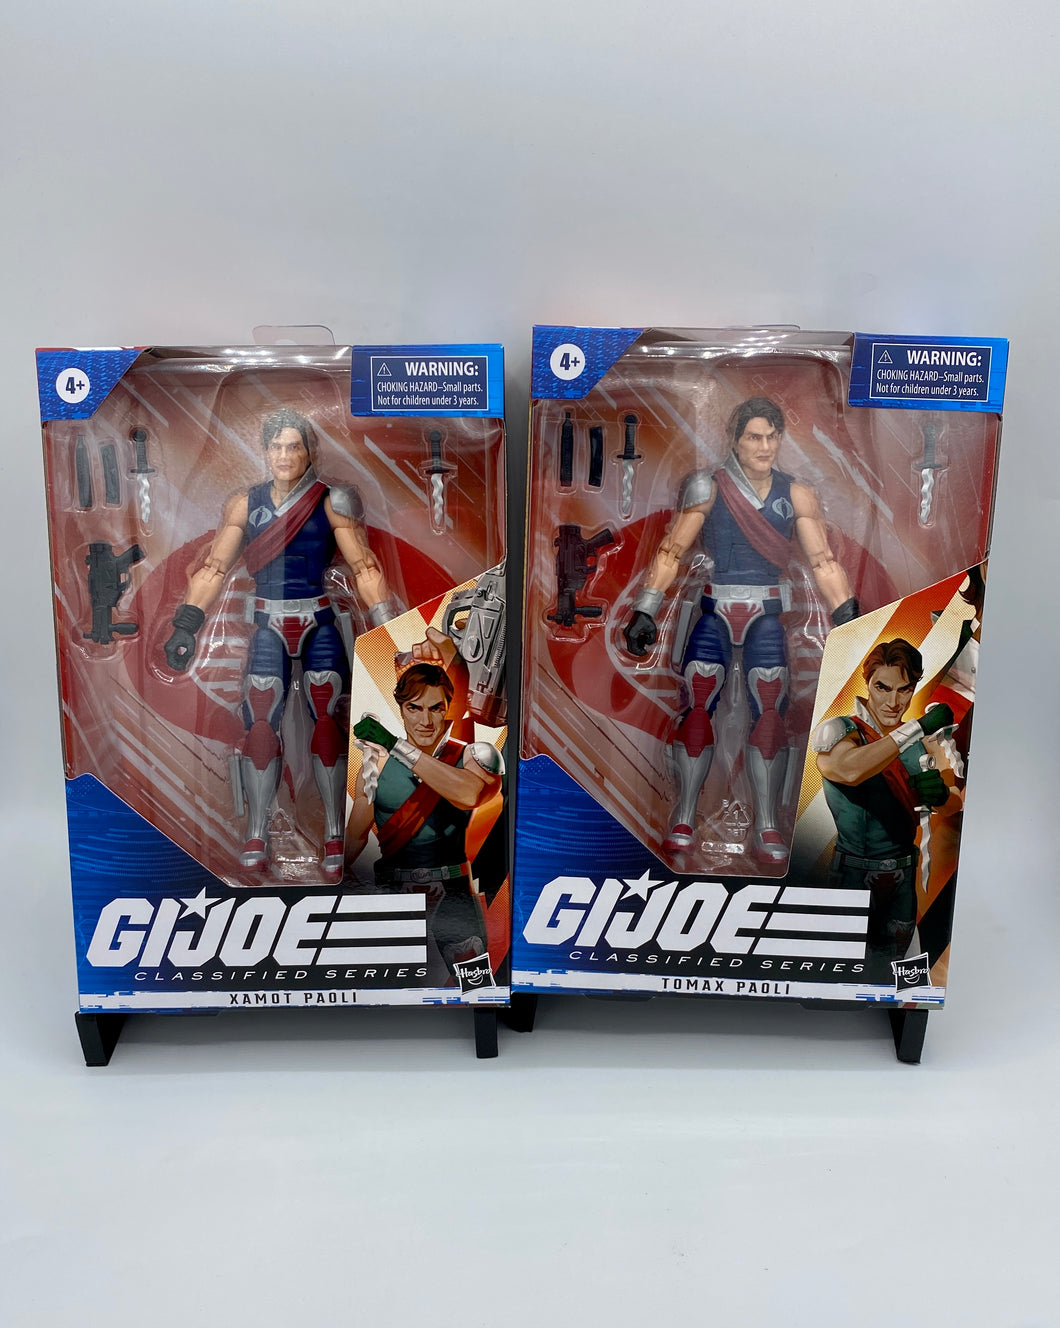 G.I. Joe Classified Series 6-Inch: Xamot & Tomax Paoli Action Figures